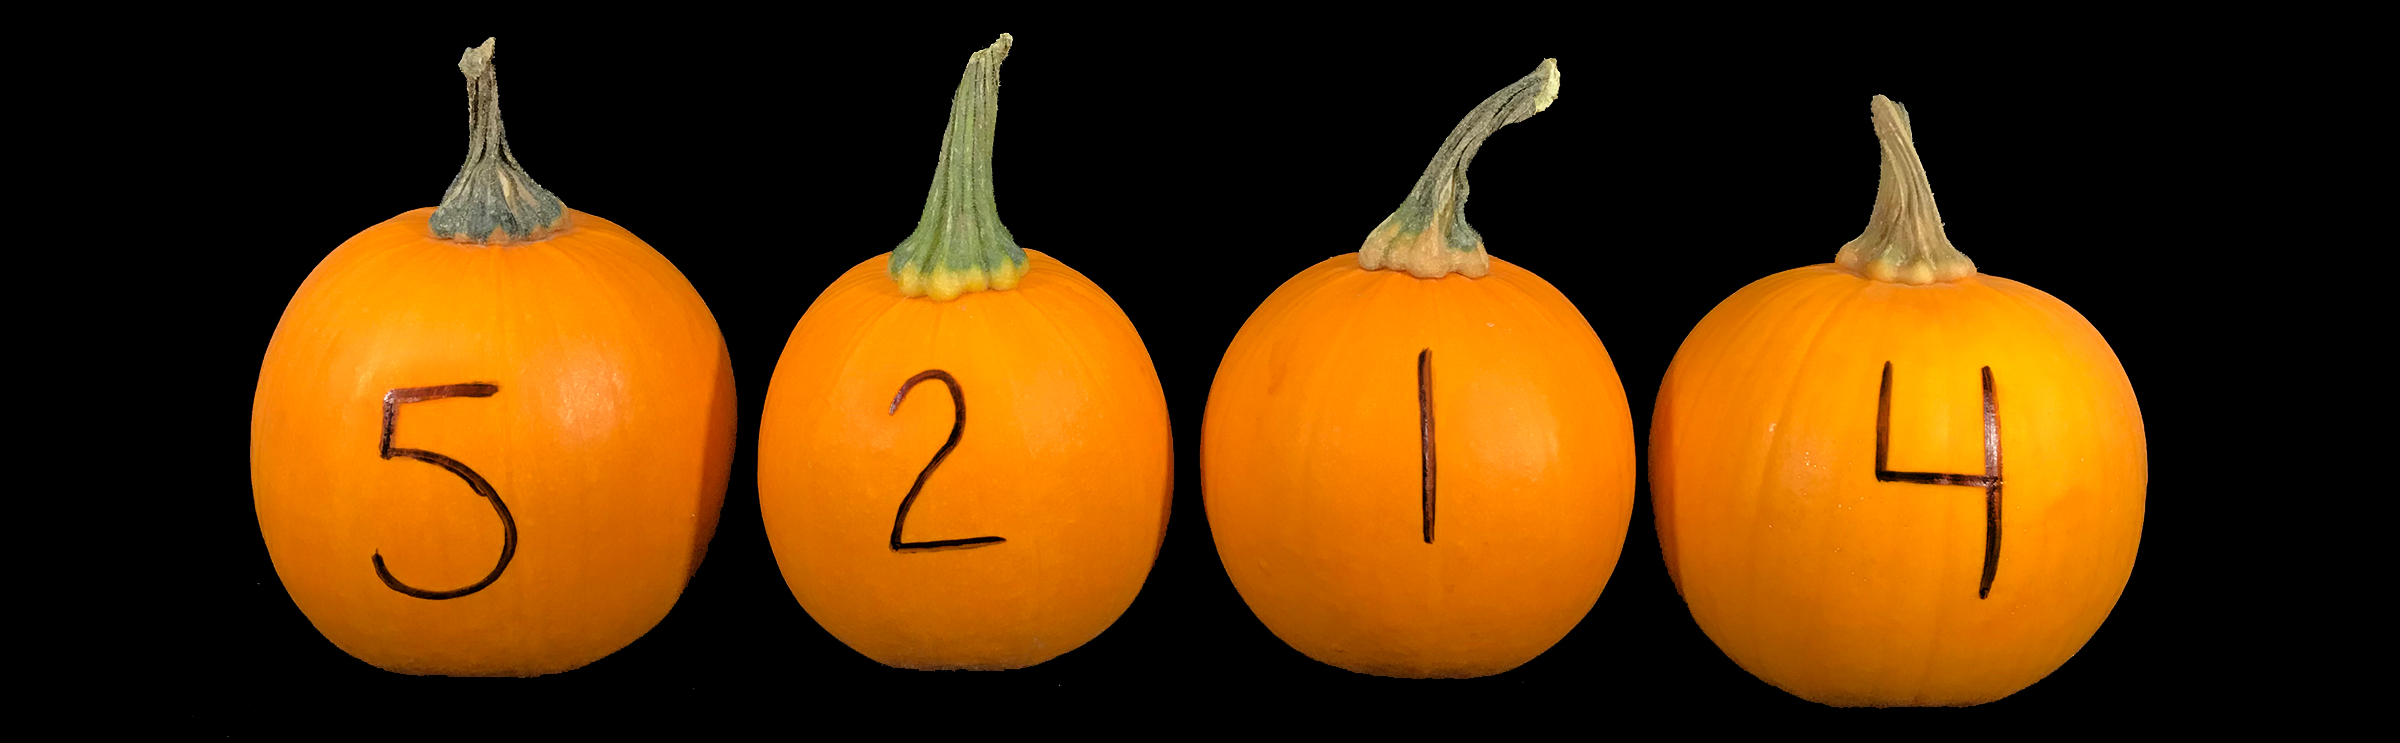 Digit Values with Pumpkins